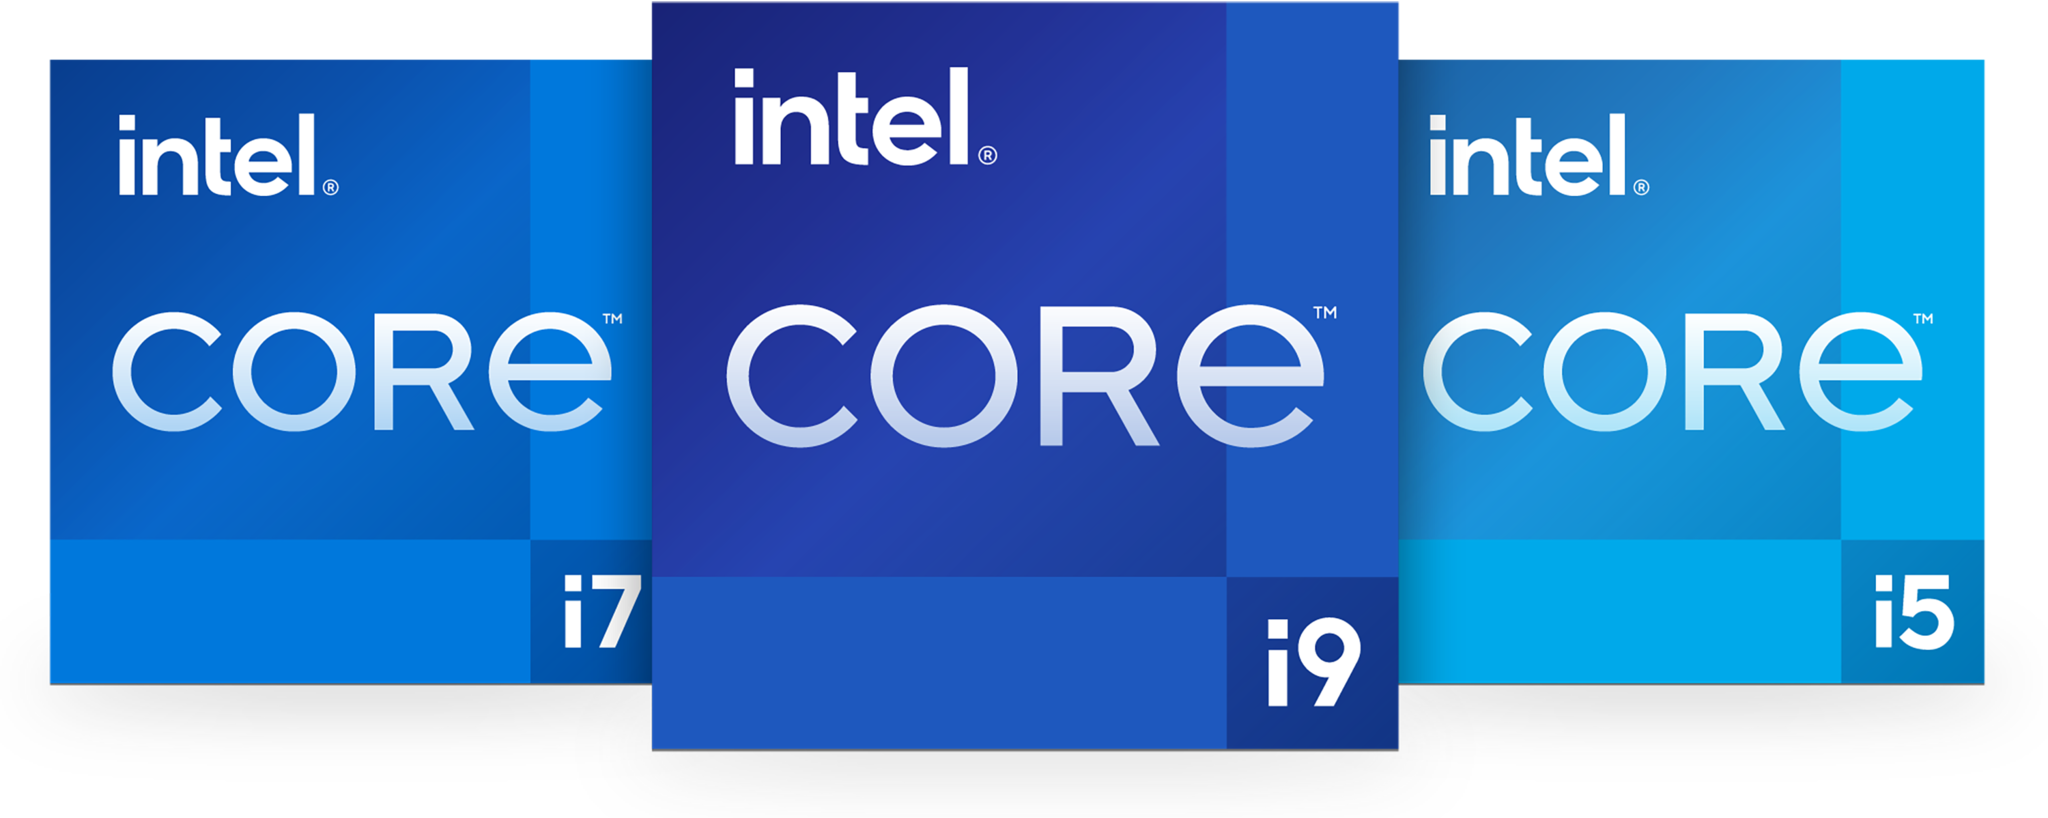 Intel 11th Gen Badges